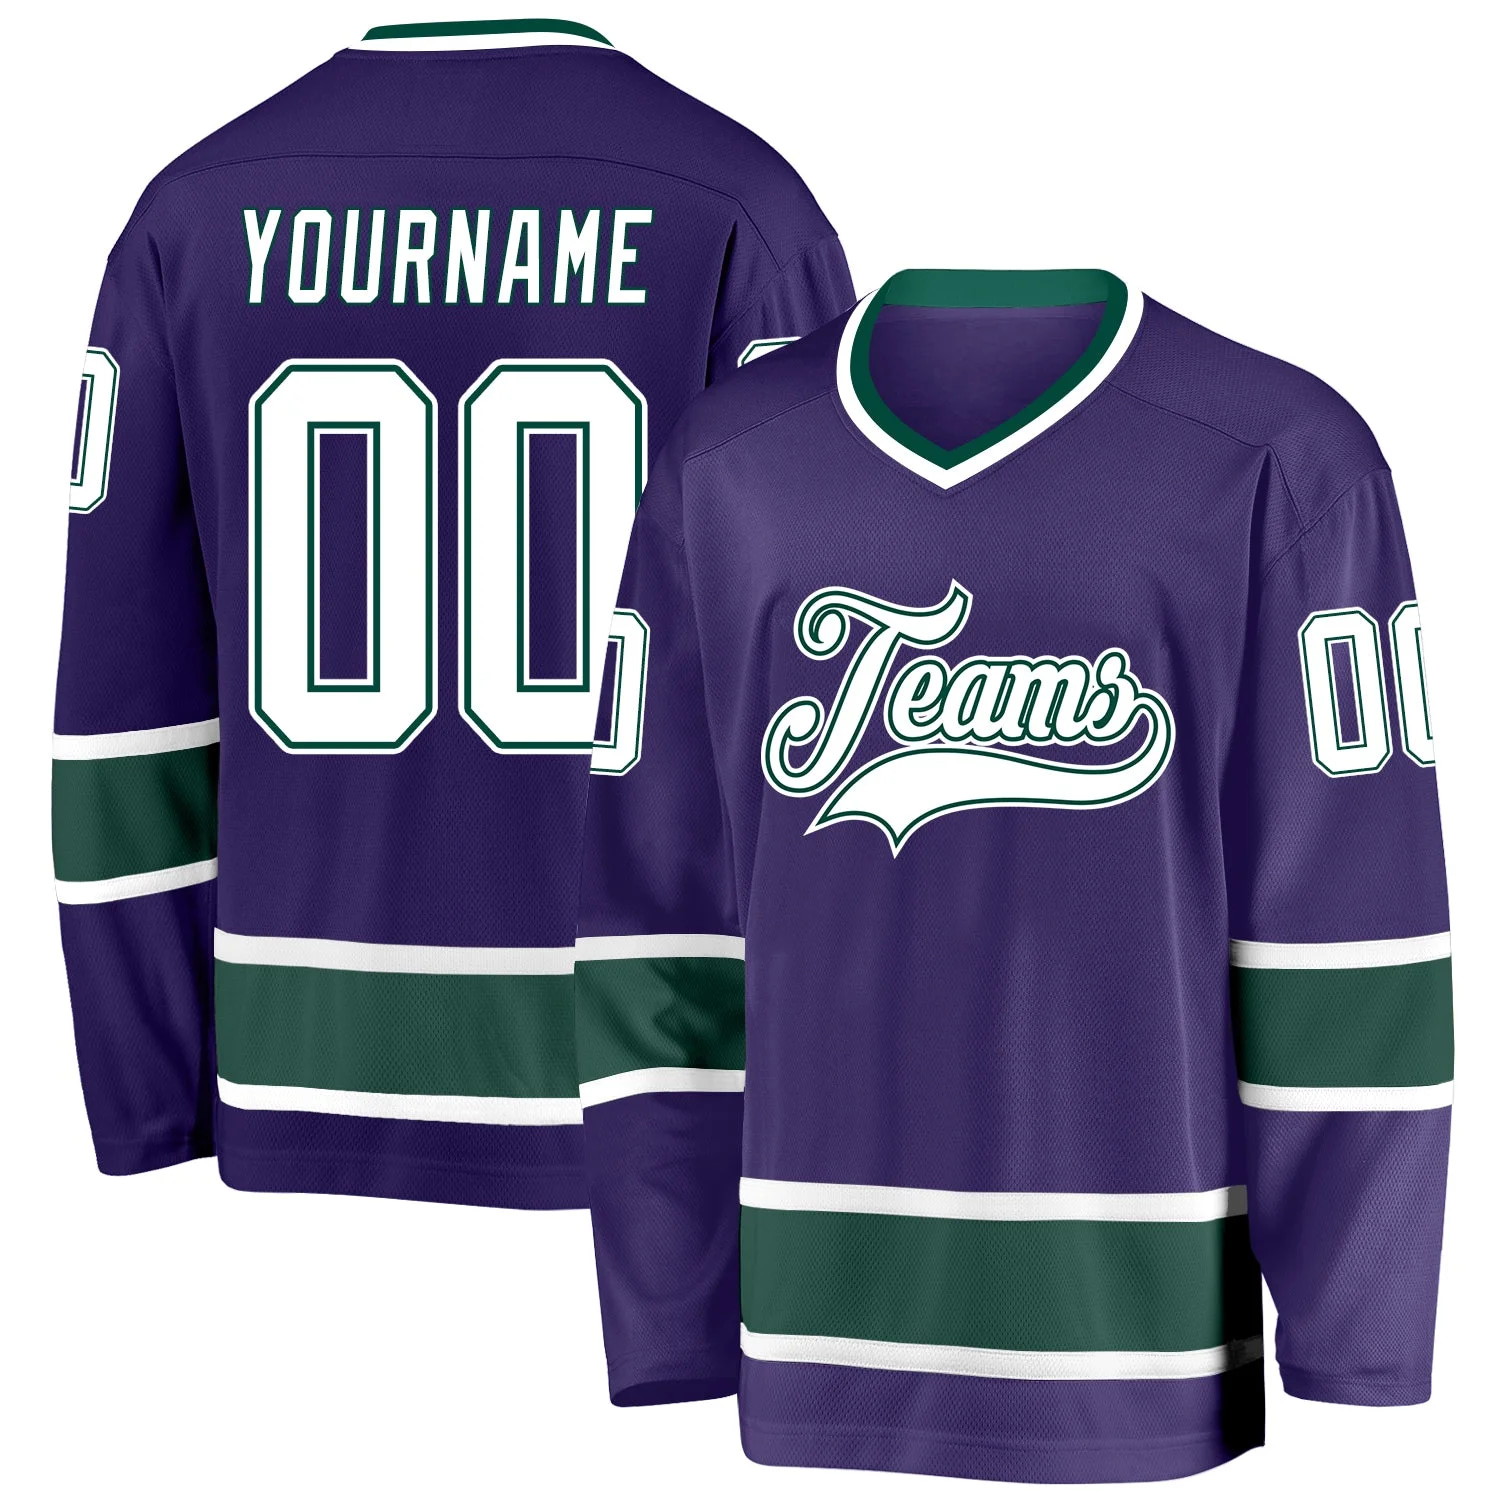 Stitched And Print Purple White-green Hockey Jersey Custom